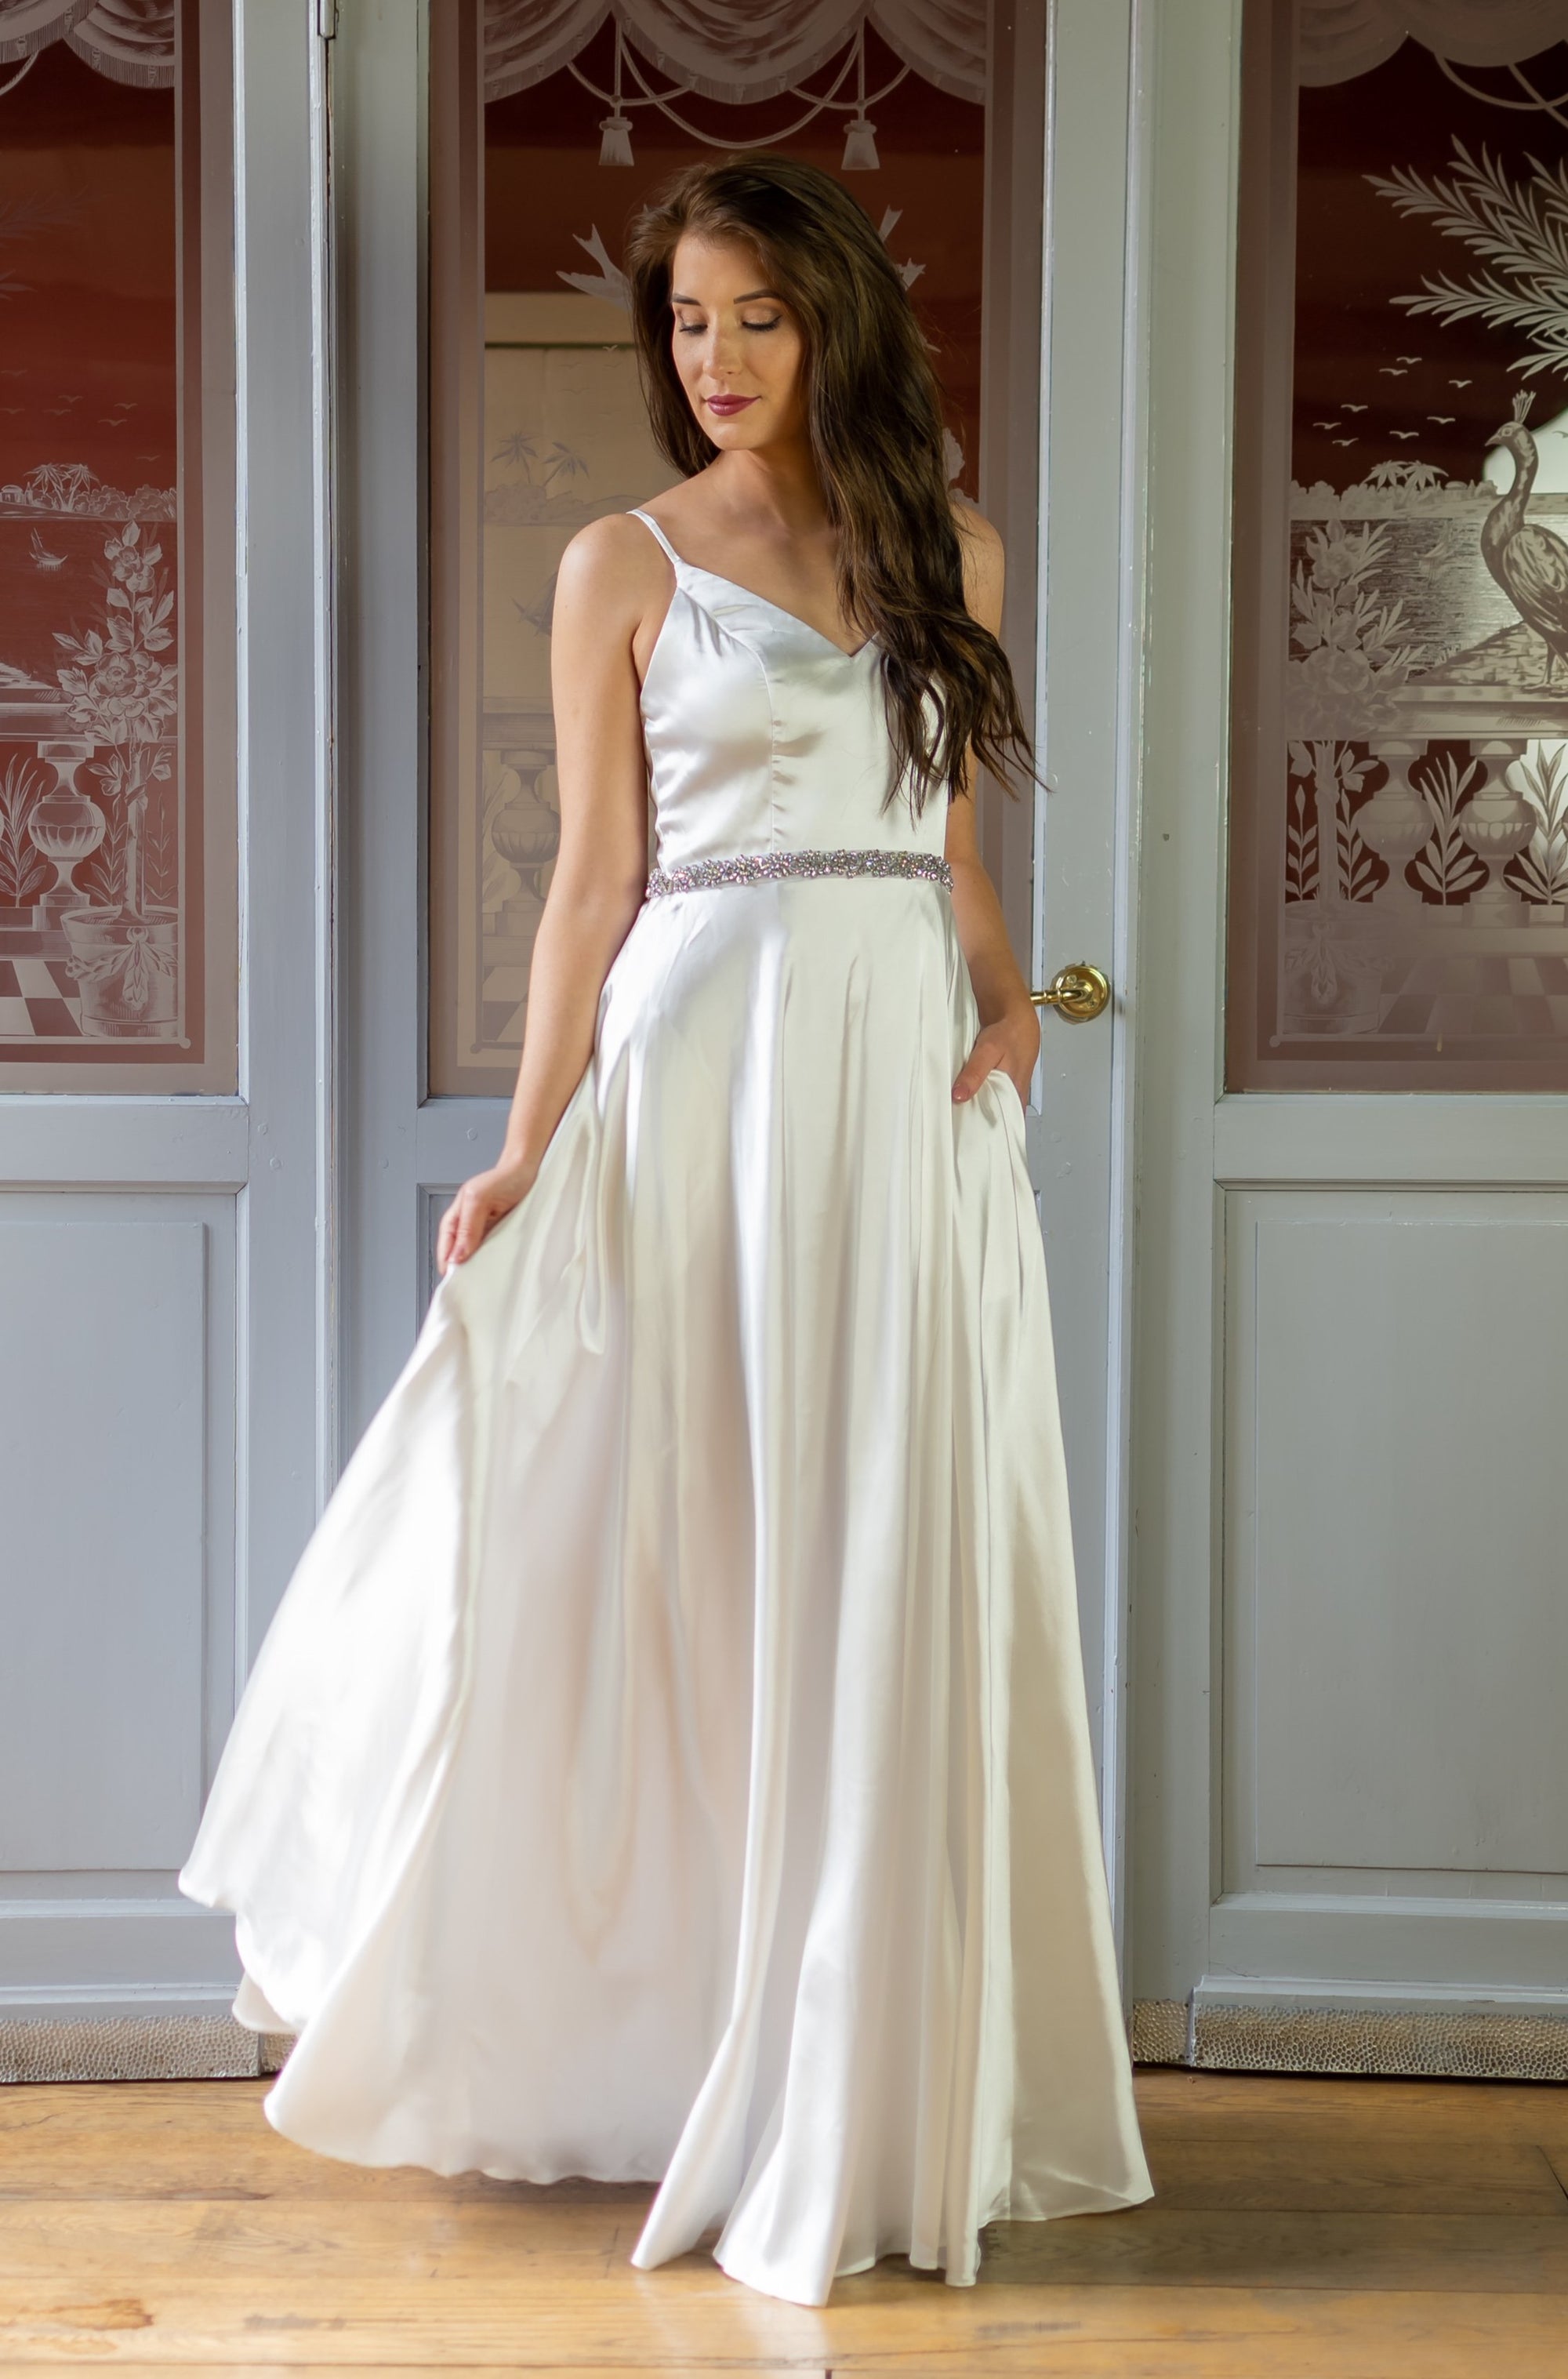 Satin Dream Dress - Ivory White